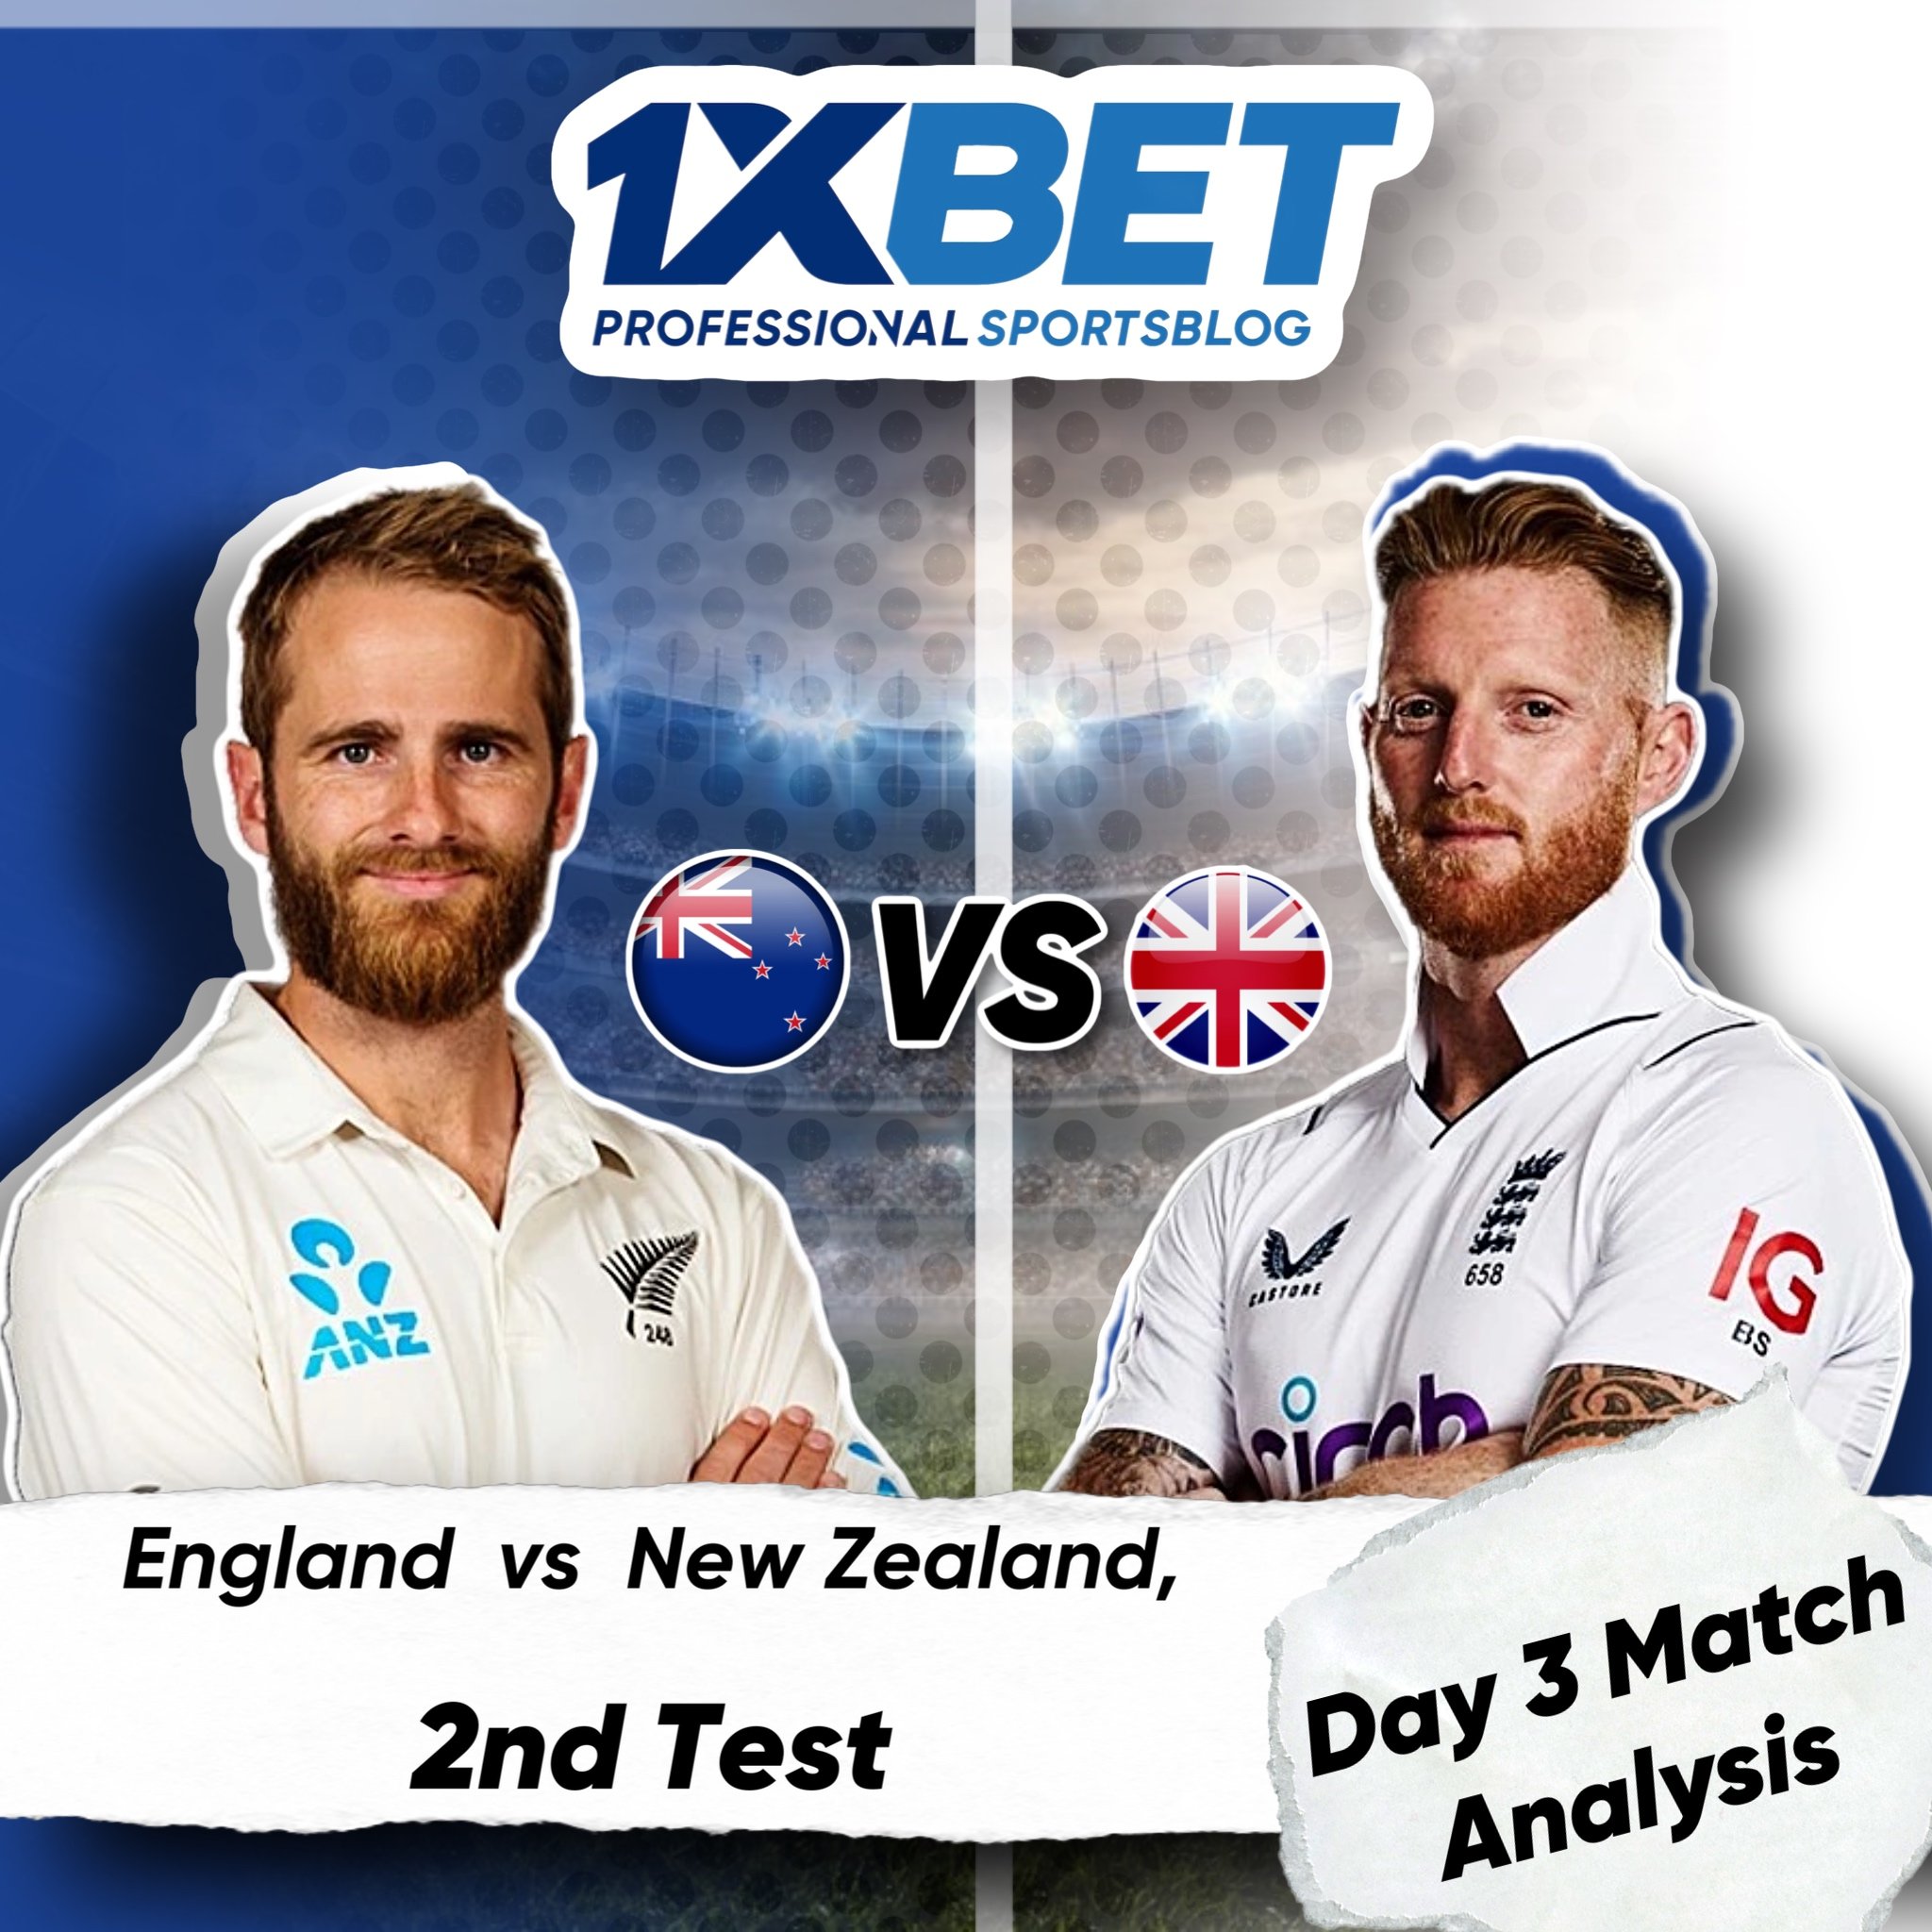 India vs Australia, 3rd Test, Day 3 Match Analysis